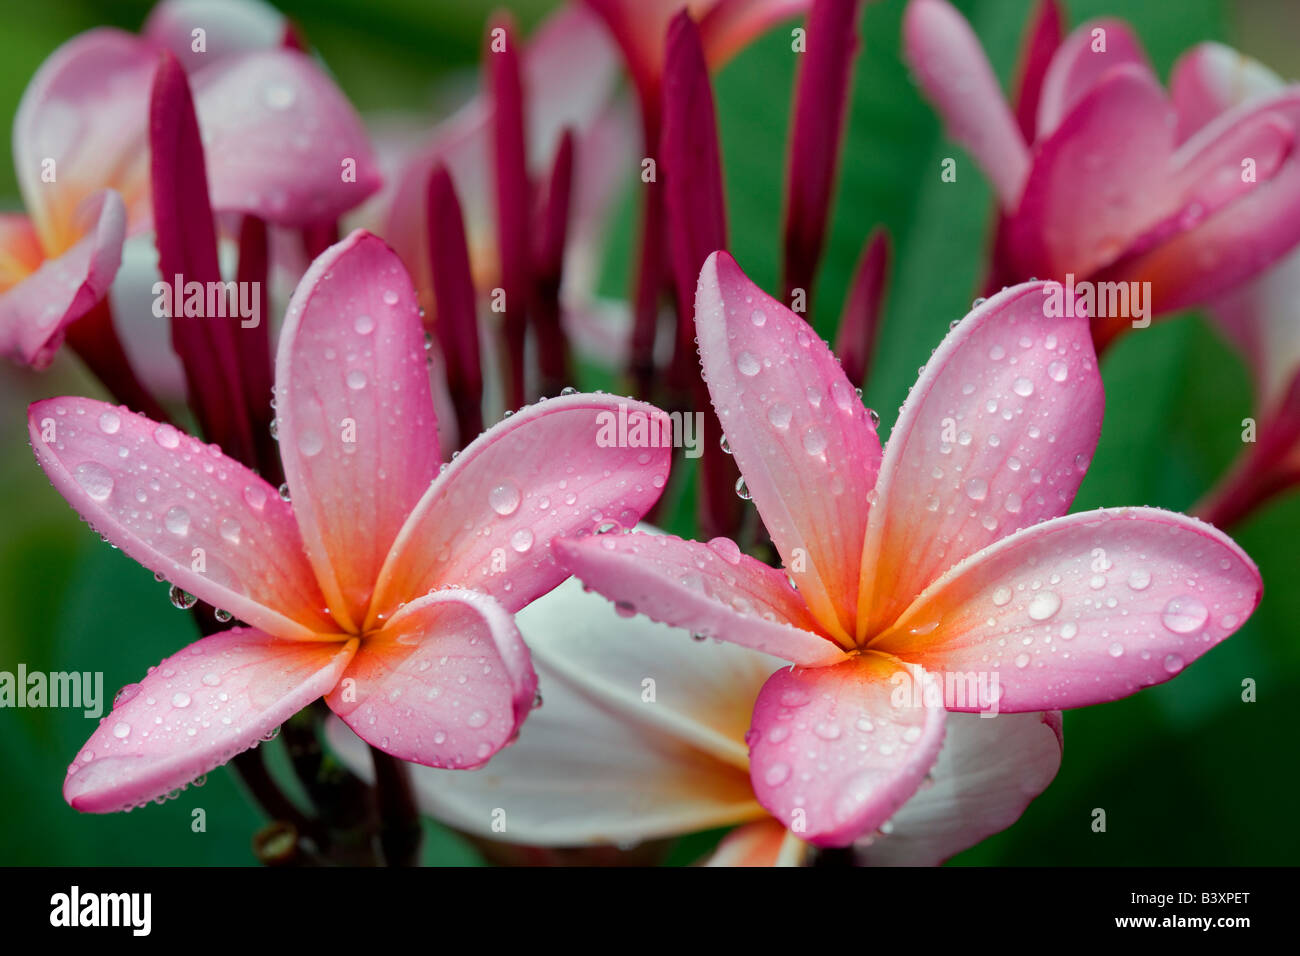 Plumaria oder Frangipani Blüte mit Regen Tropfen Kauai Hawaii Stockfoto